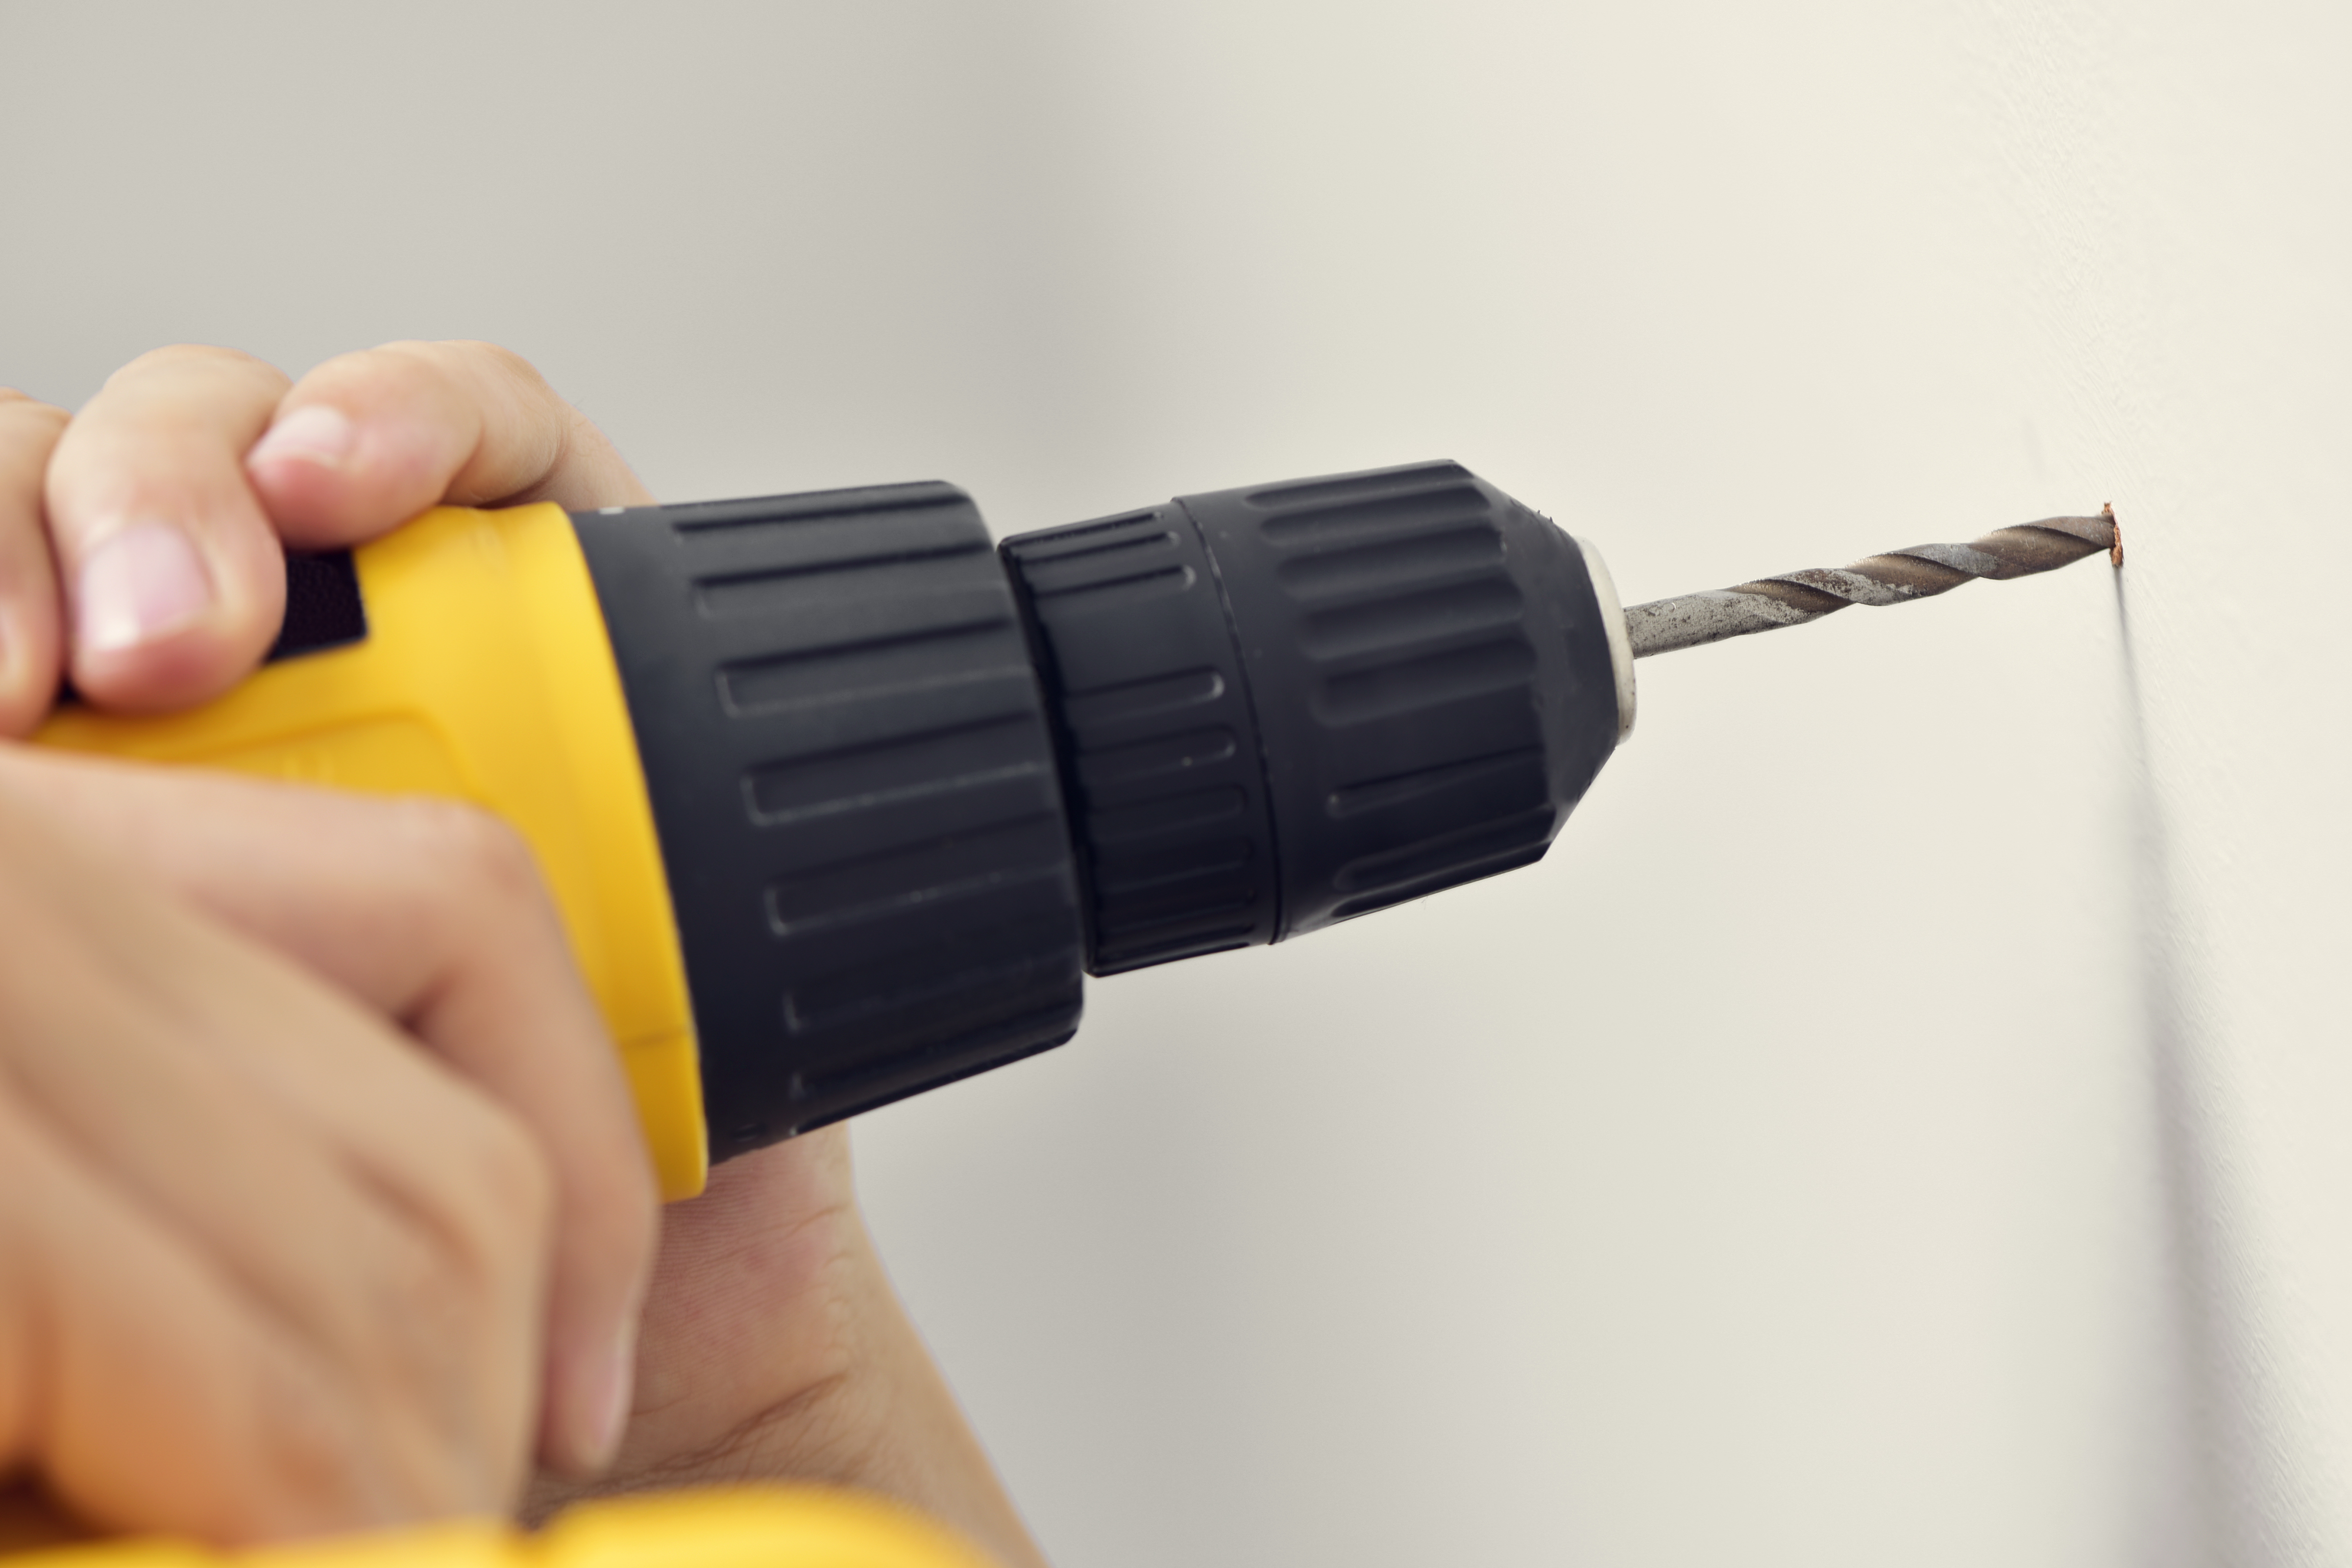 How To Remove Stuck Drill Bit From Keyless Chuck Drill Bit Is Stuck in the Stud | Hunker